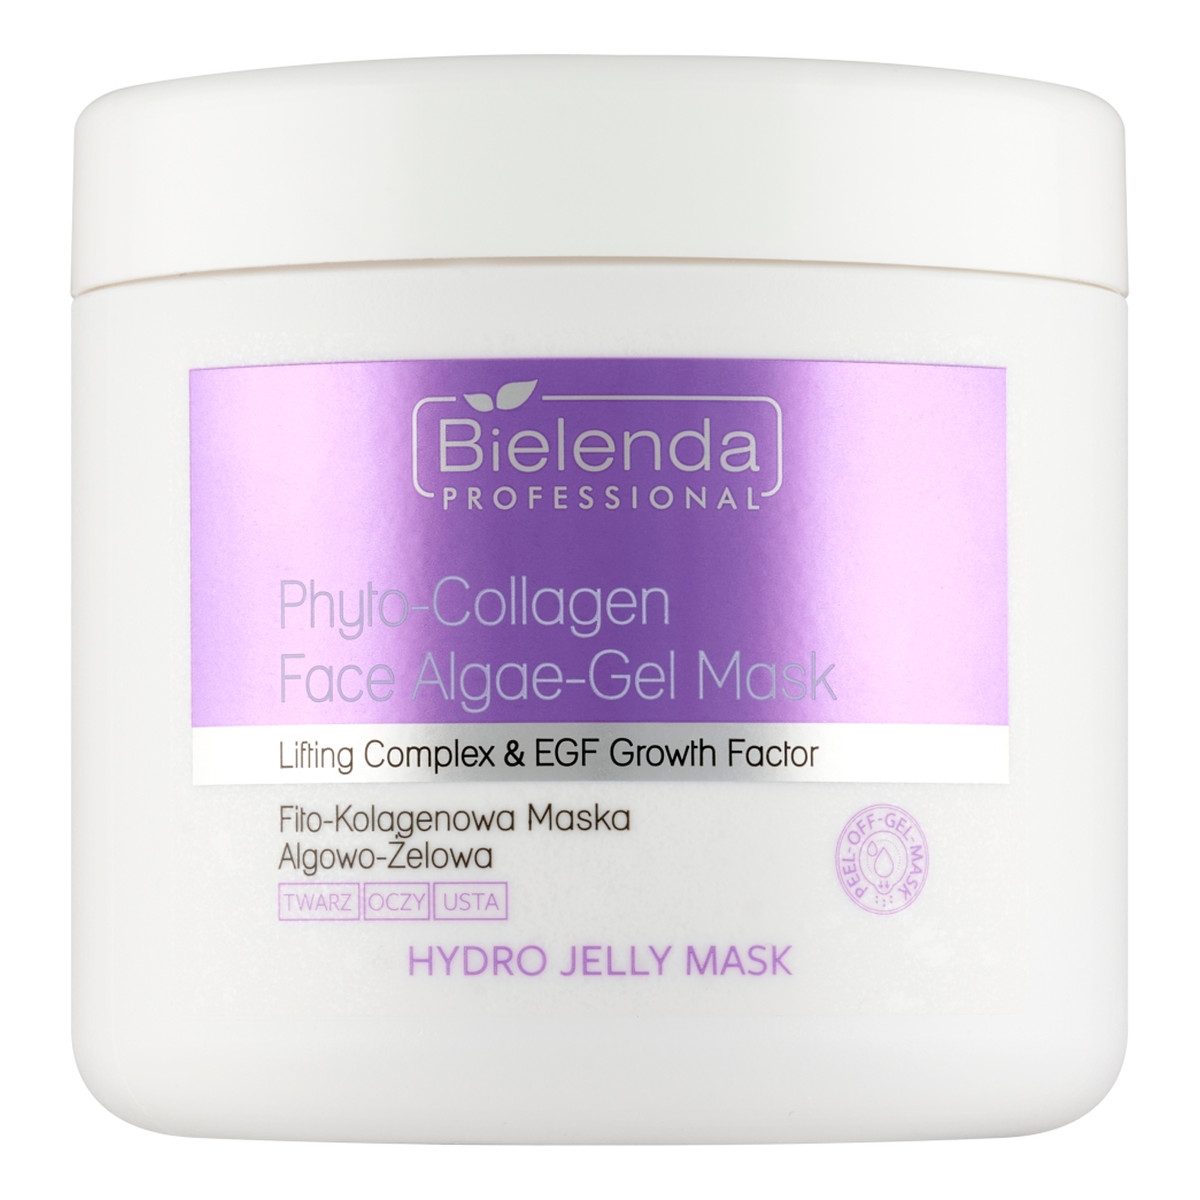 Bielenda Professional Hydro jelly mask fito-kolagenowa maska algowo-żelowa 190g